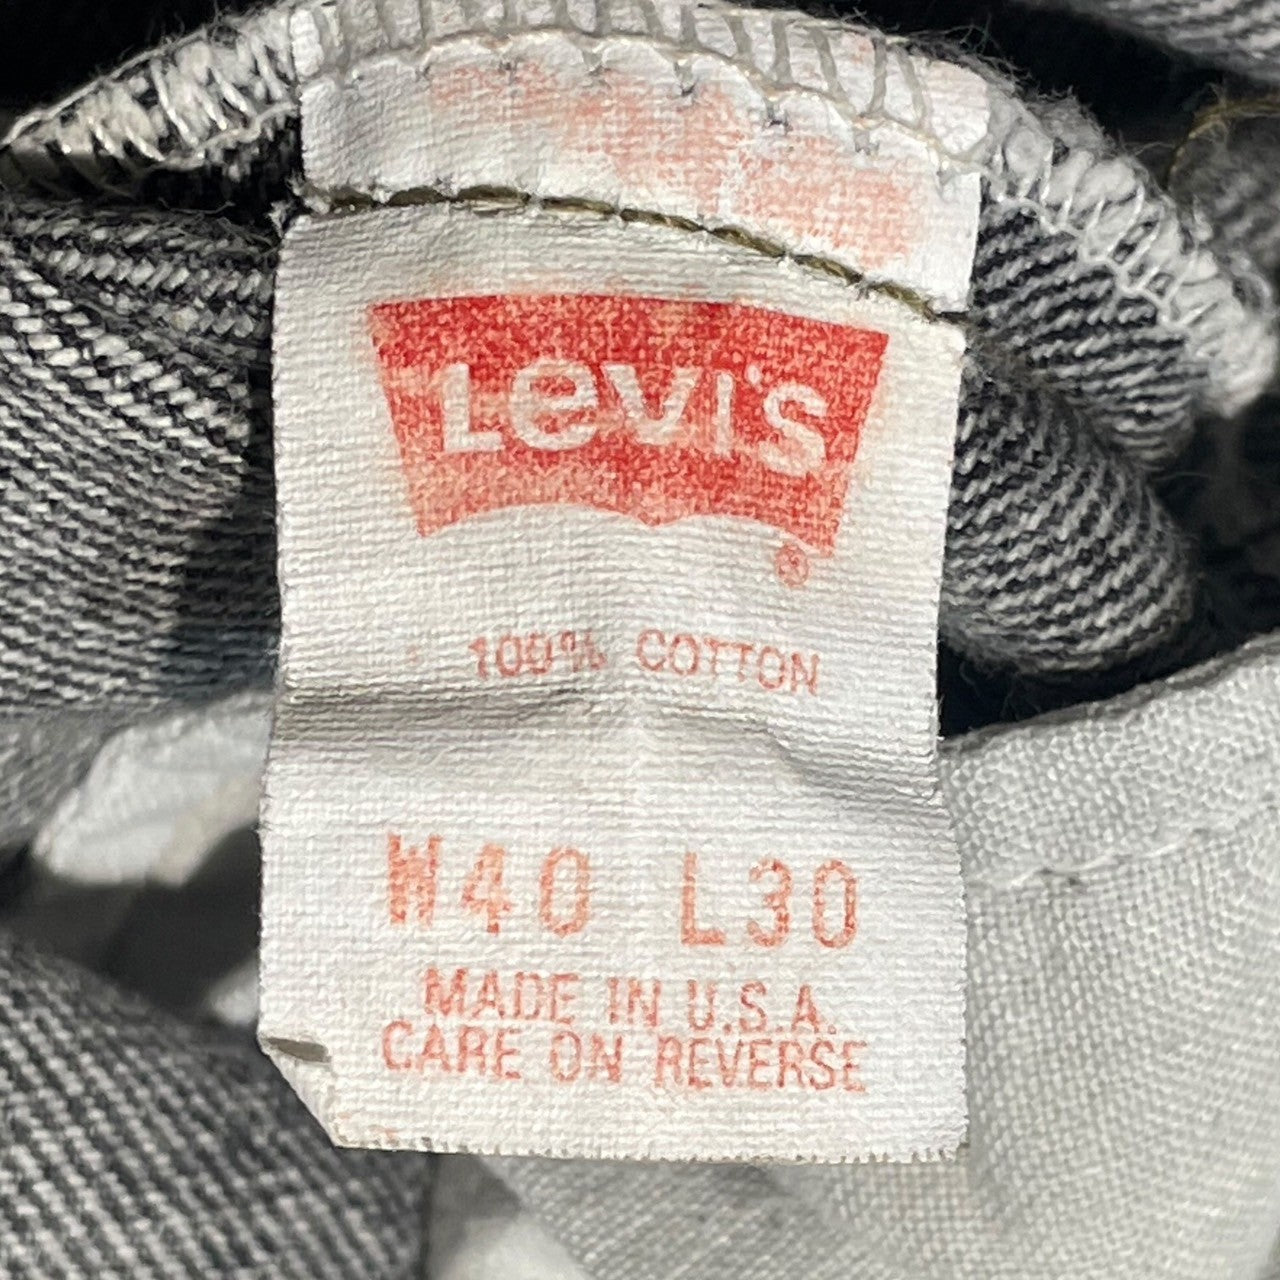 Levi's(リーバイス) 90's 550 black denim pants ブラック デニム パンツ 550-4858 W40/L30 ブラック 先染め 1991年2月製造 90年代 ヴィンテージ USA製